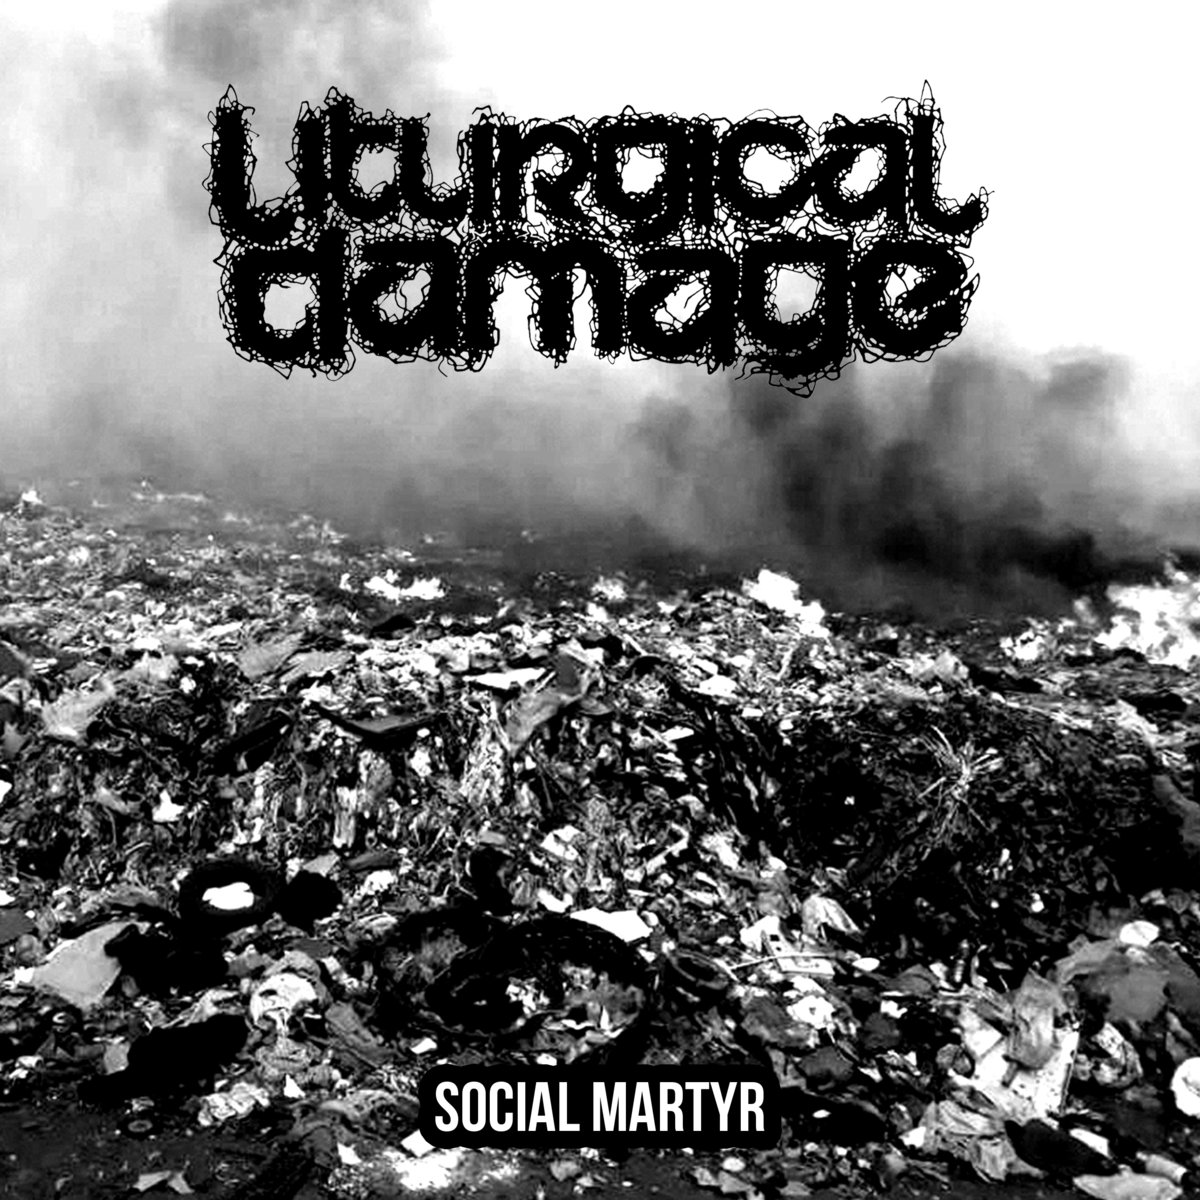 LITURGICAL DAMAGE - "SOCIAL MARTYR" 7"